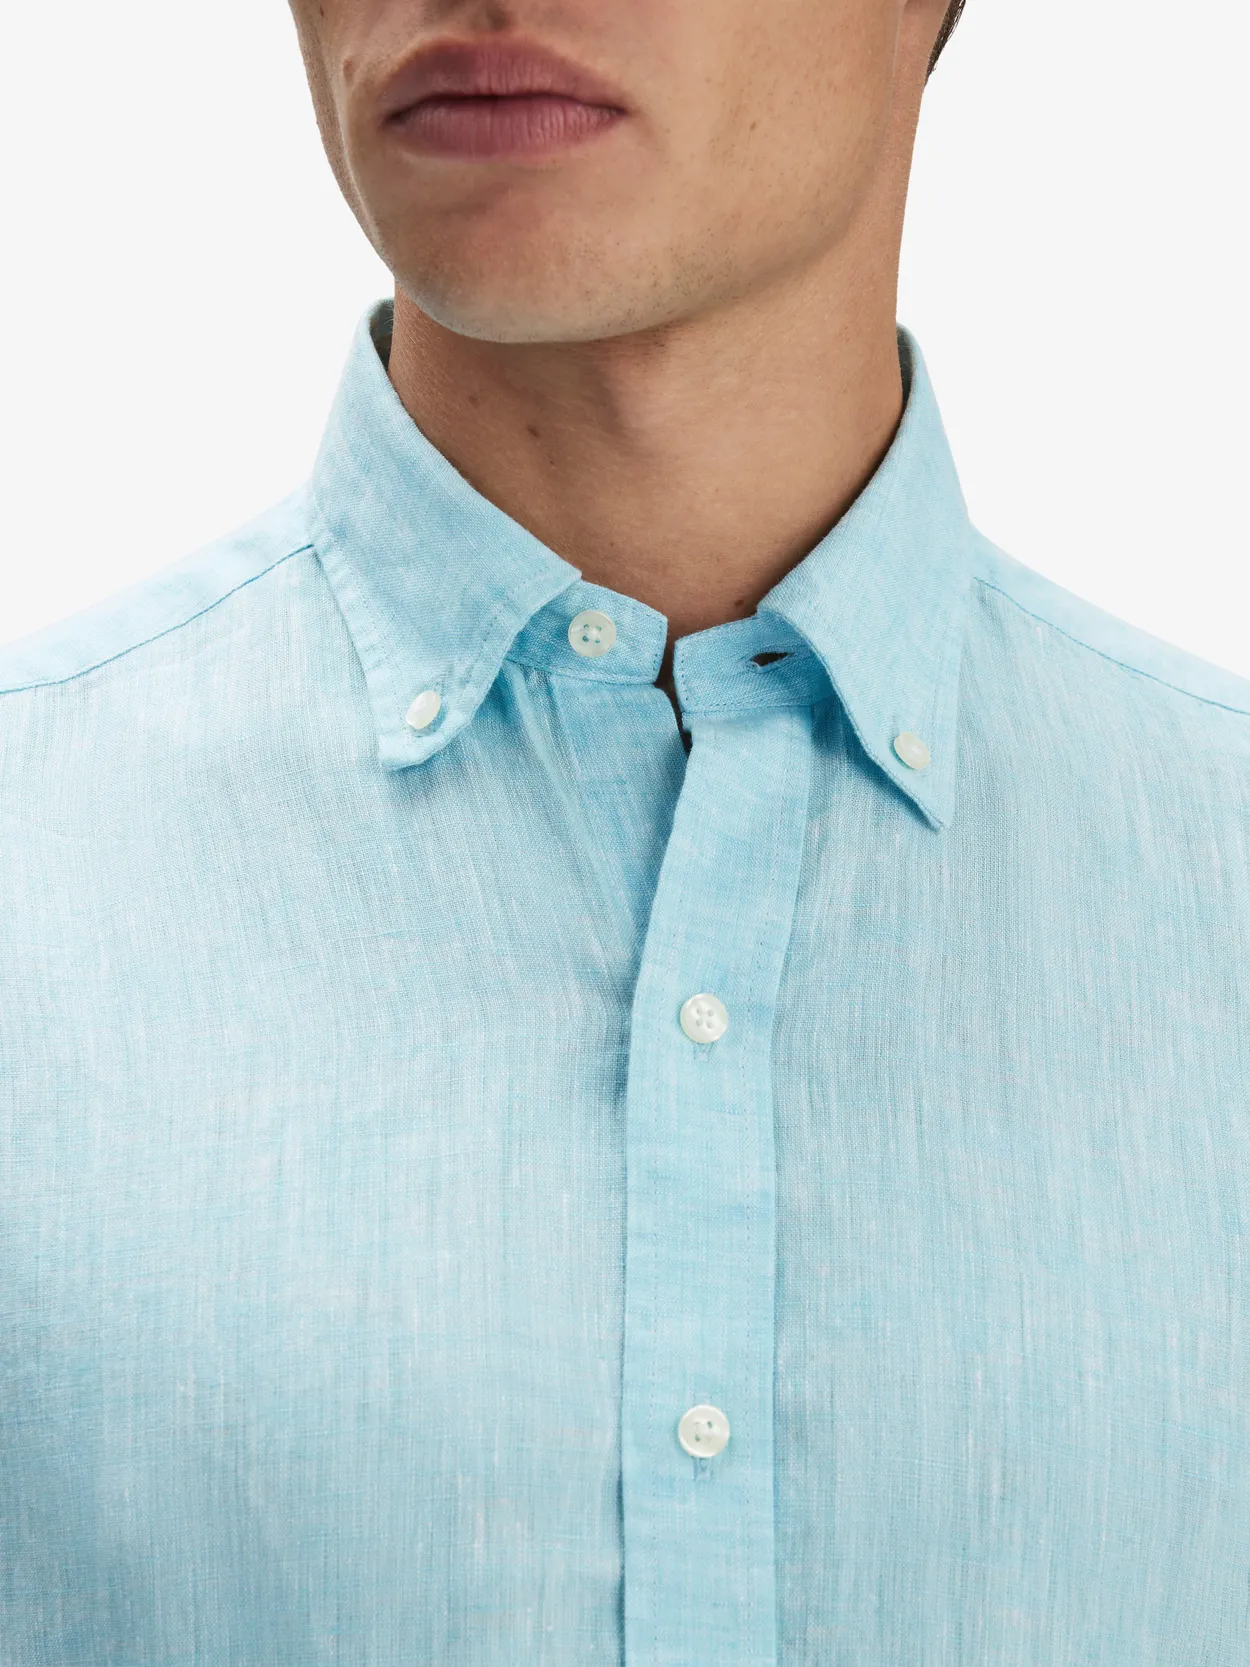 Chico's Design Turquoise Linen Blouse  Linen blouse, Turquoise shirt, Tops  designs